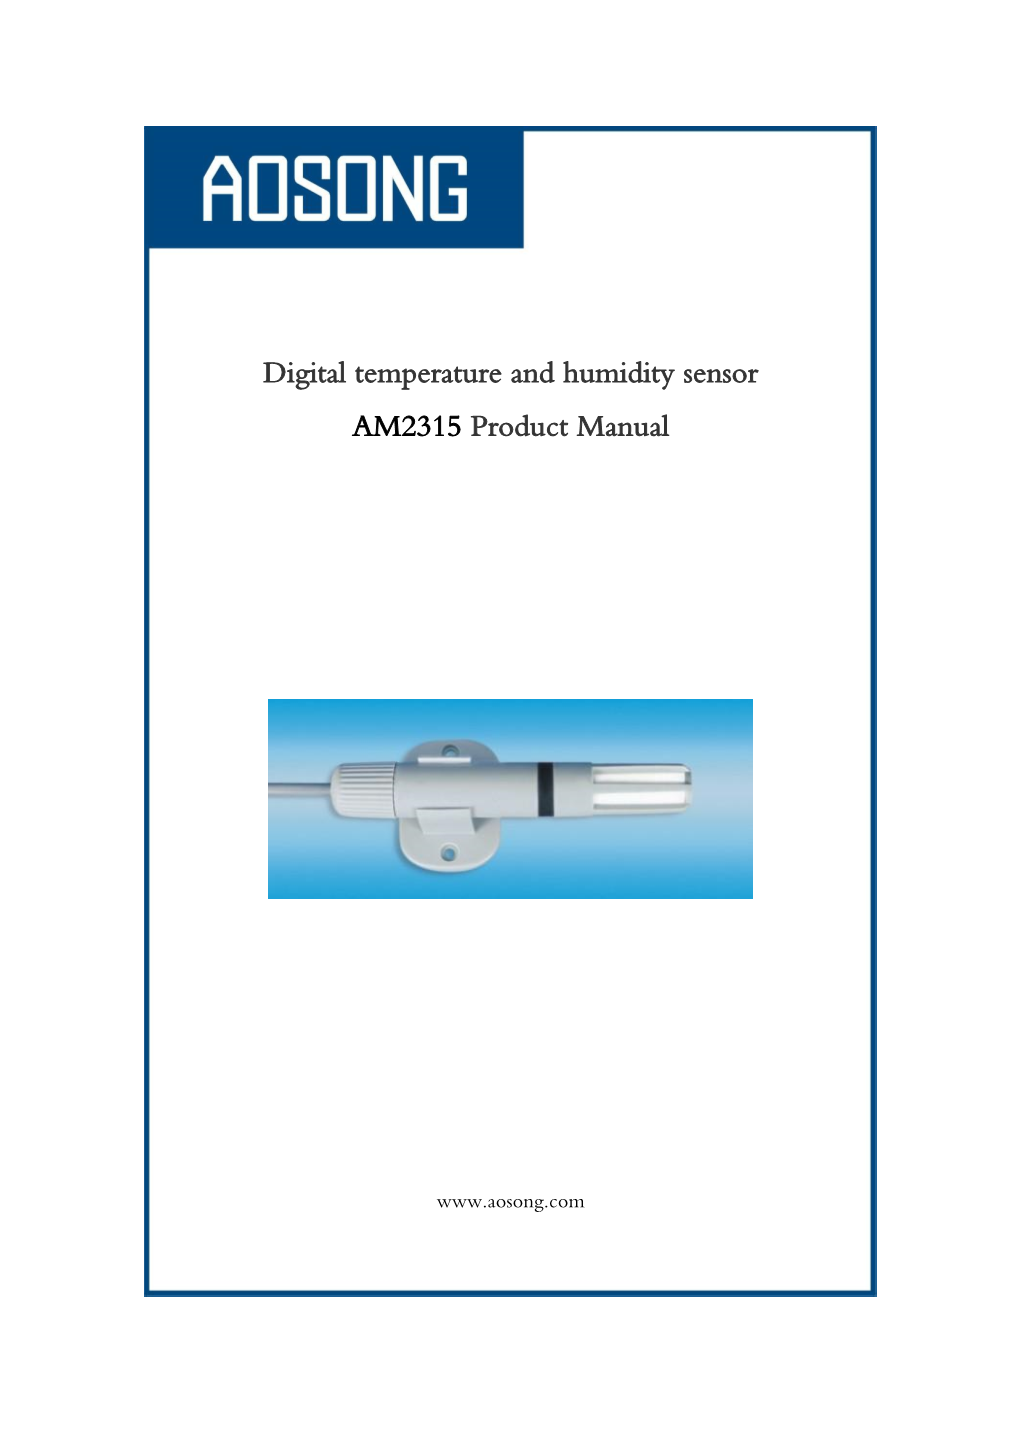 Digital Temperature and Humidity Sensor AM2315 Product Manual